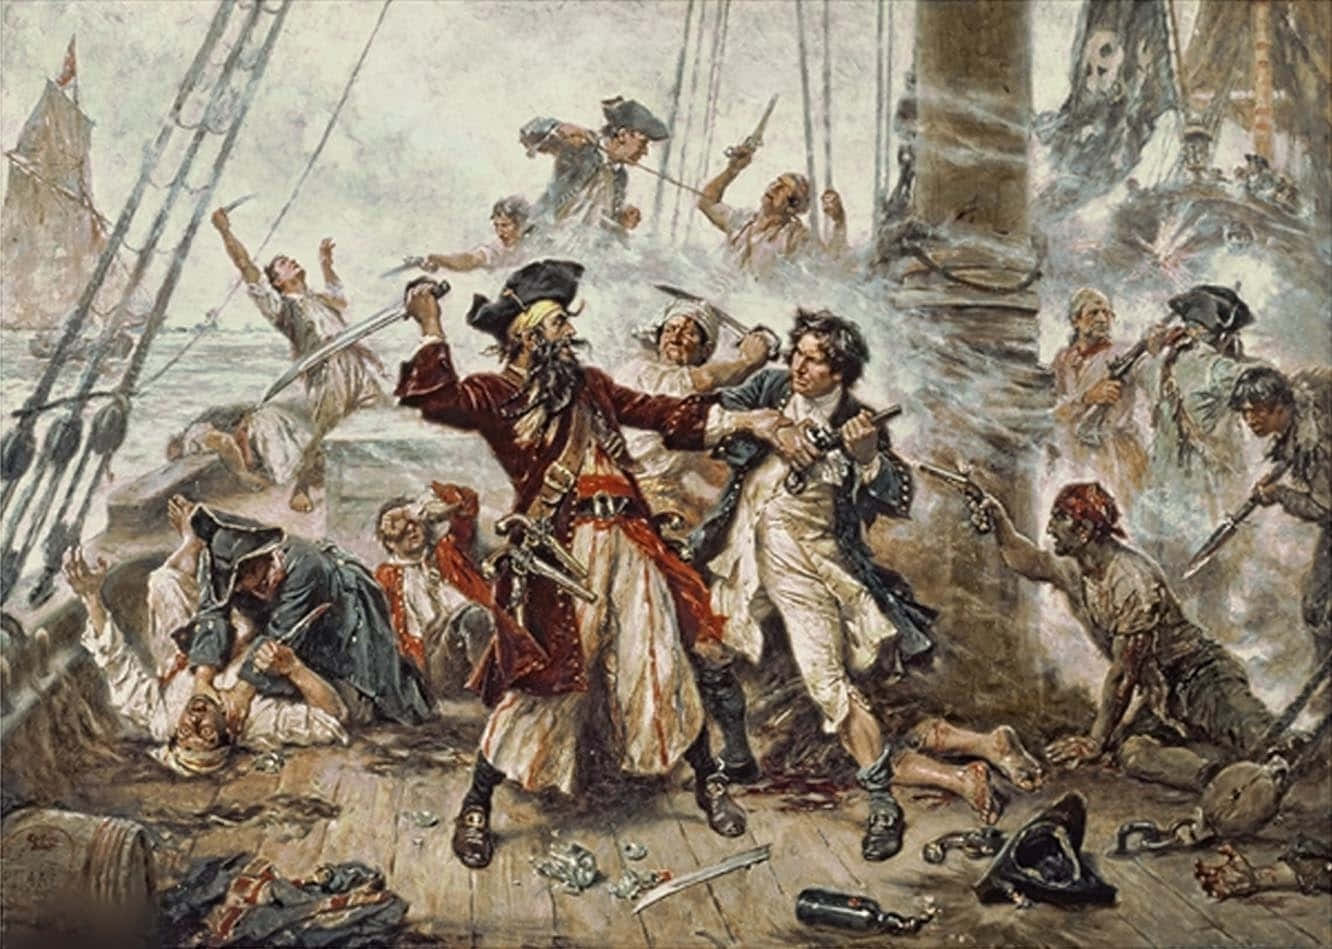 ¡zarpaa La Aventura! La Vida Llena De Historias De Un Pirata.